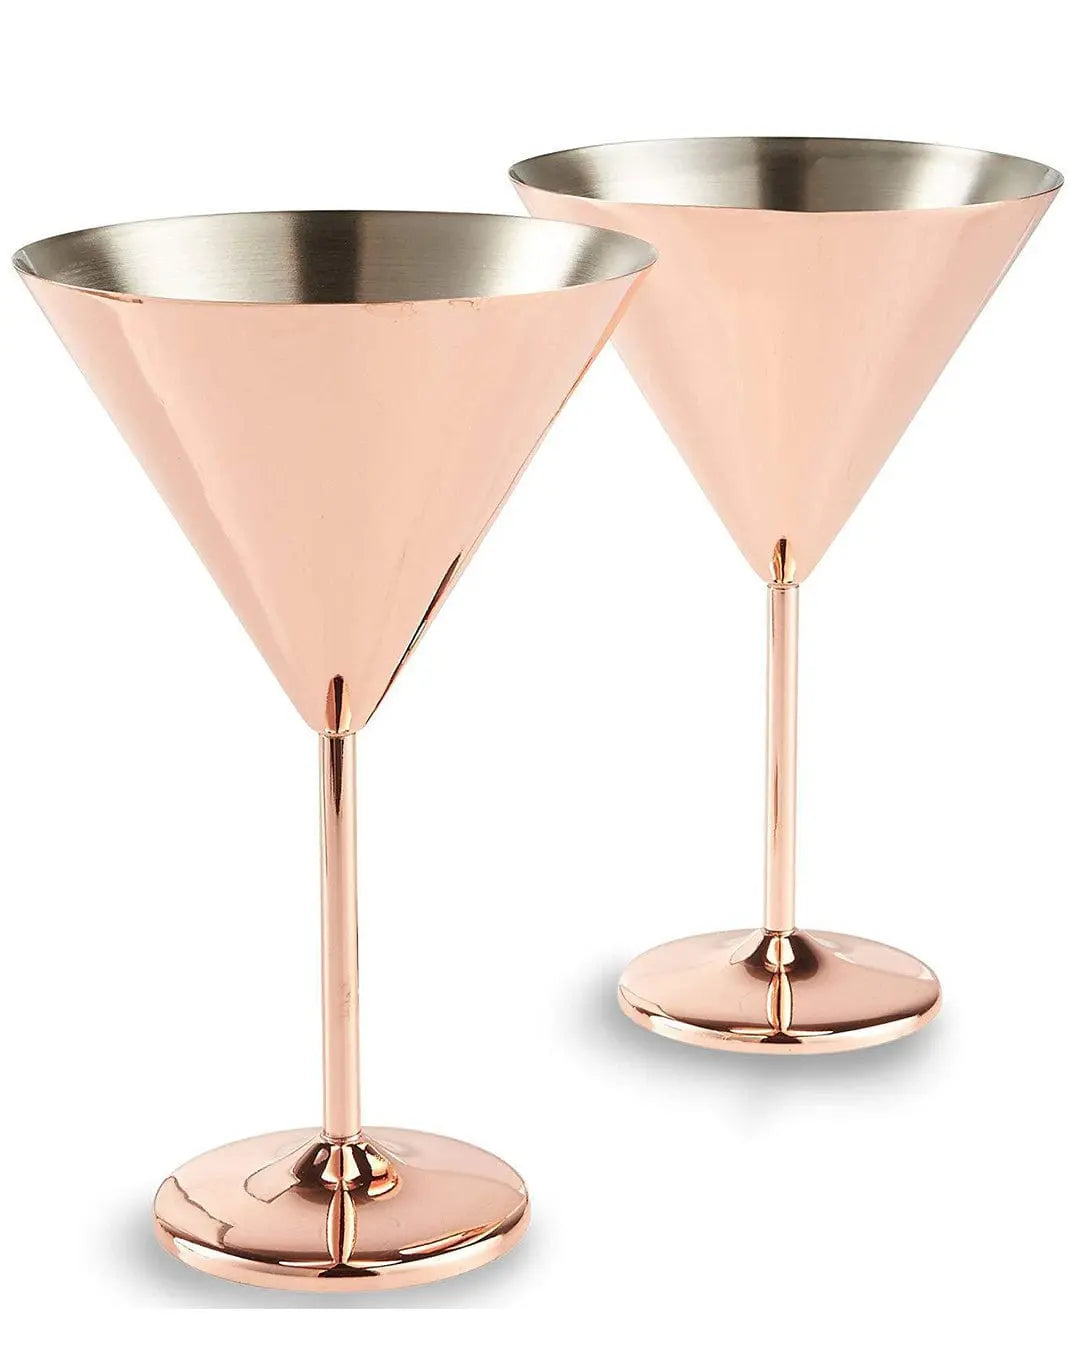 VonShef Copper Martini Glasses Tableware